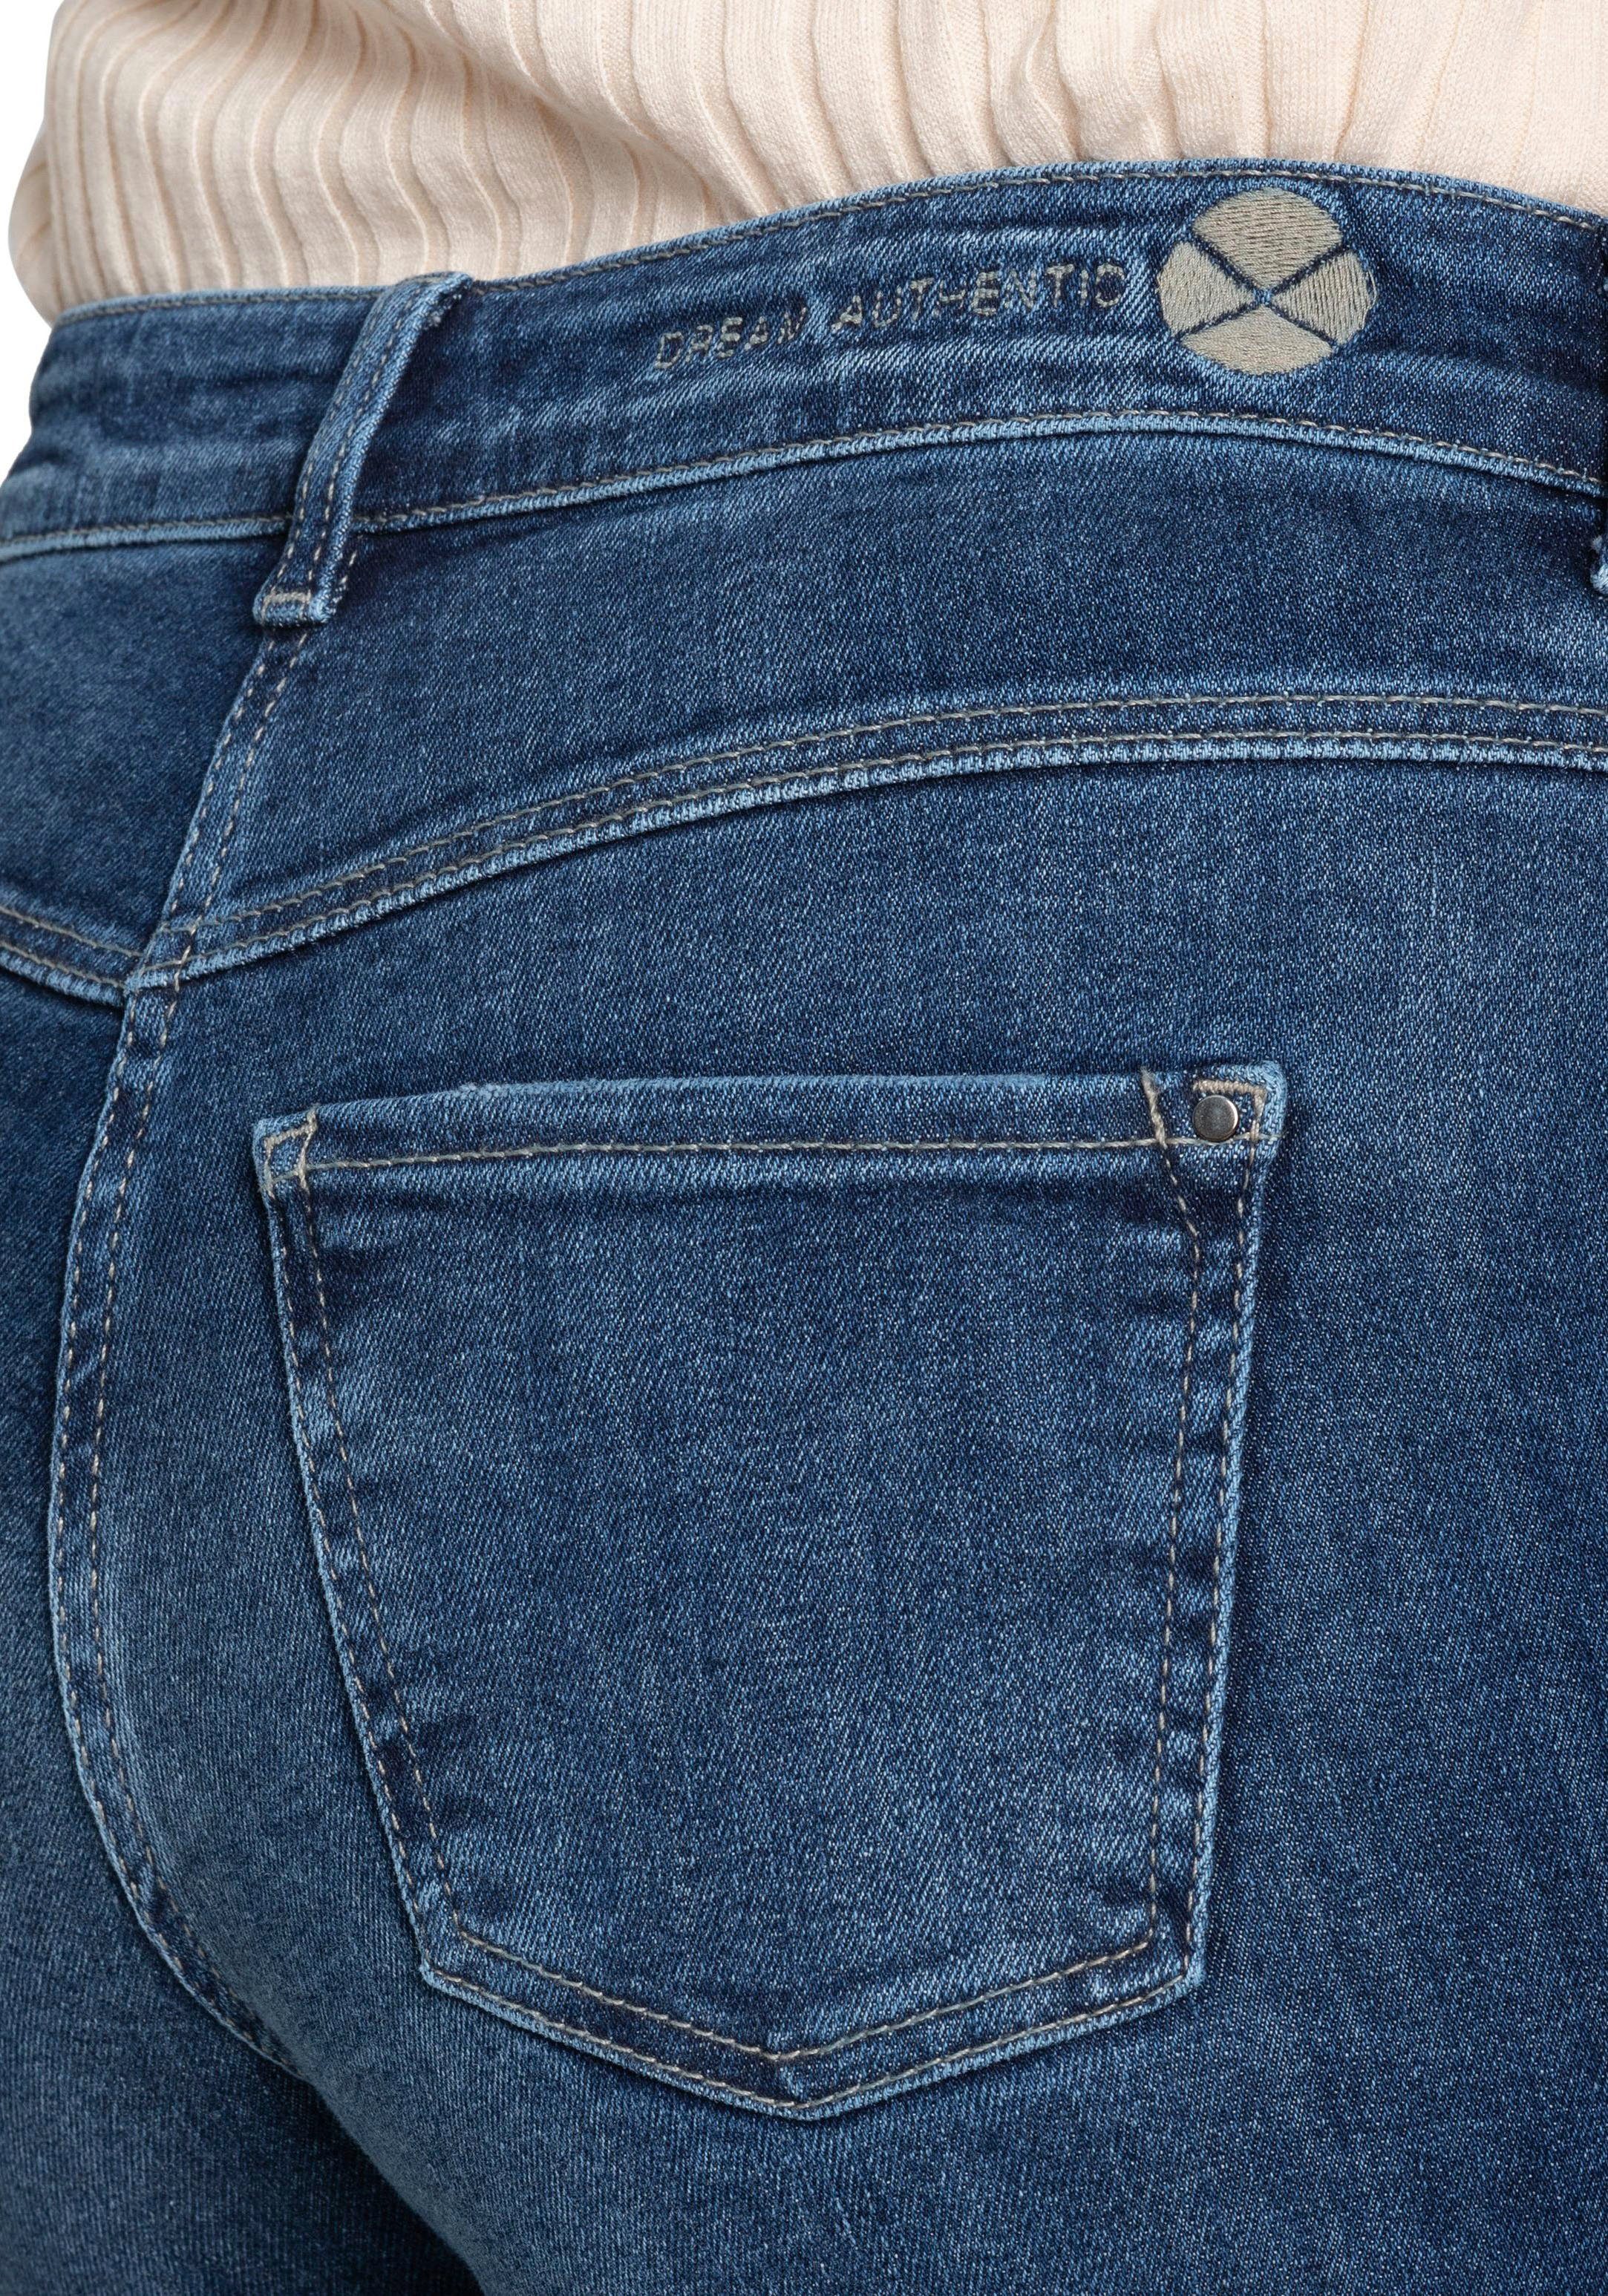 Dream formendem mit MAC cobalt authentic authentic Jeans wash Shaping-Effekt Weite Wide